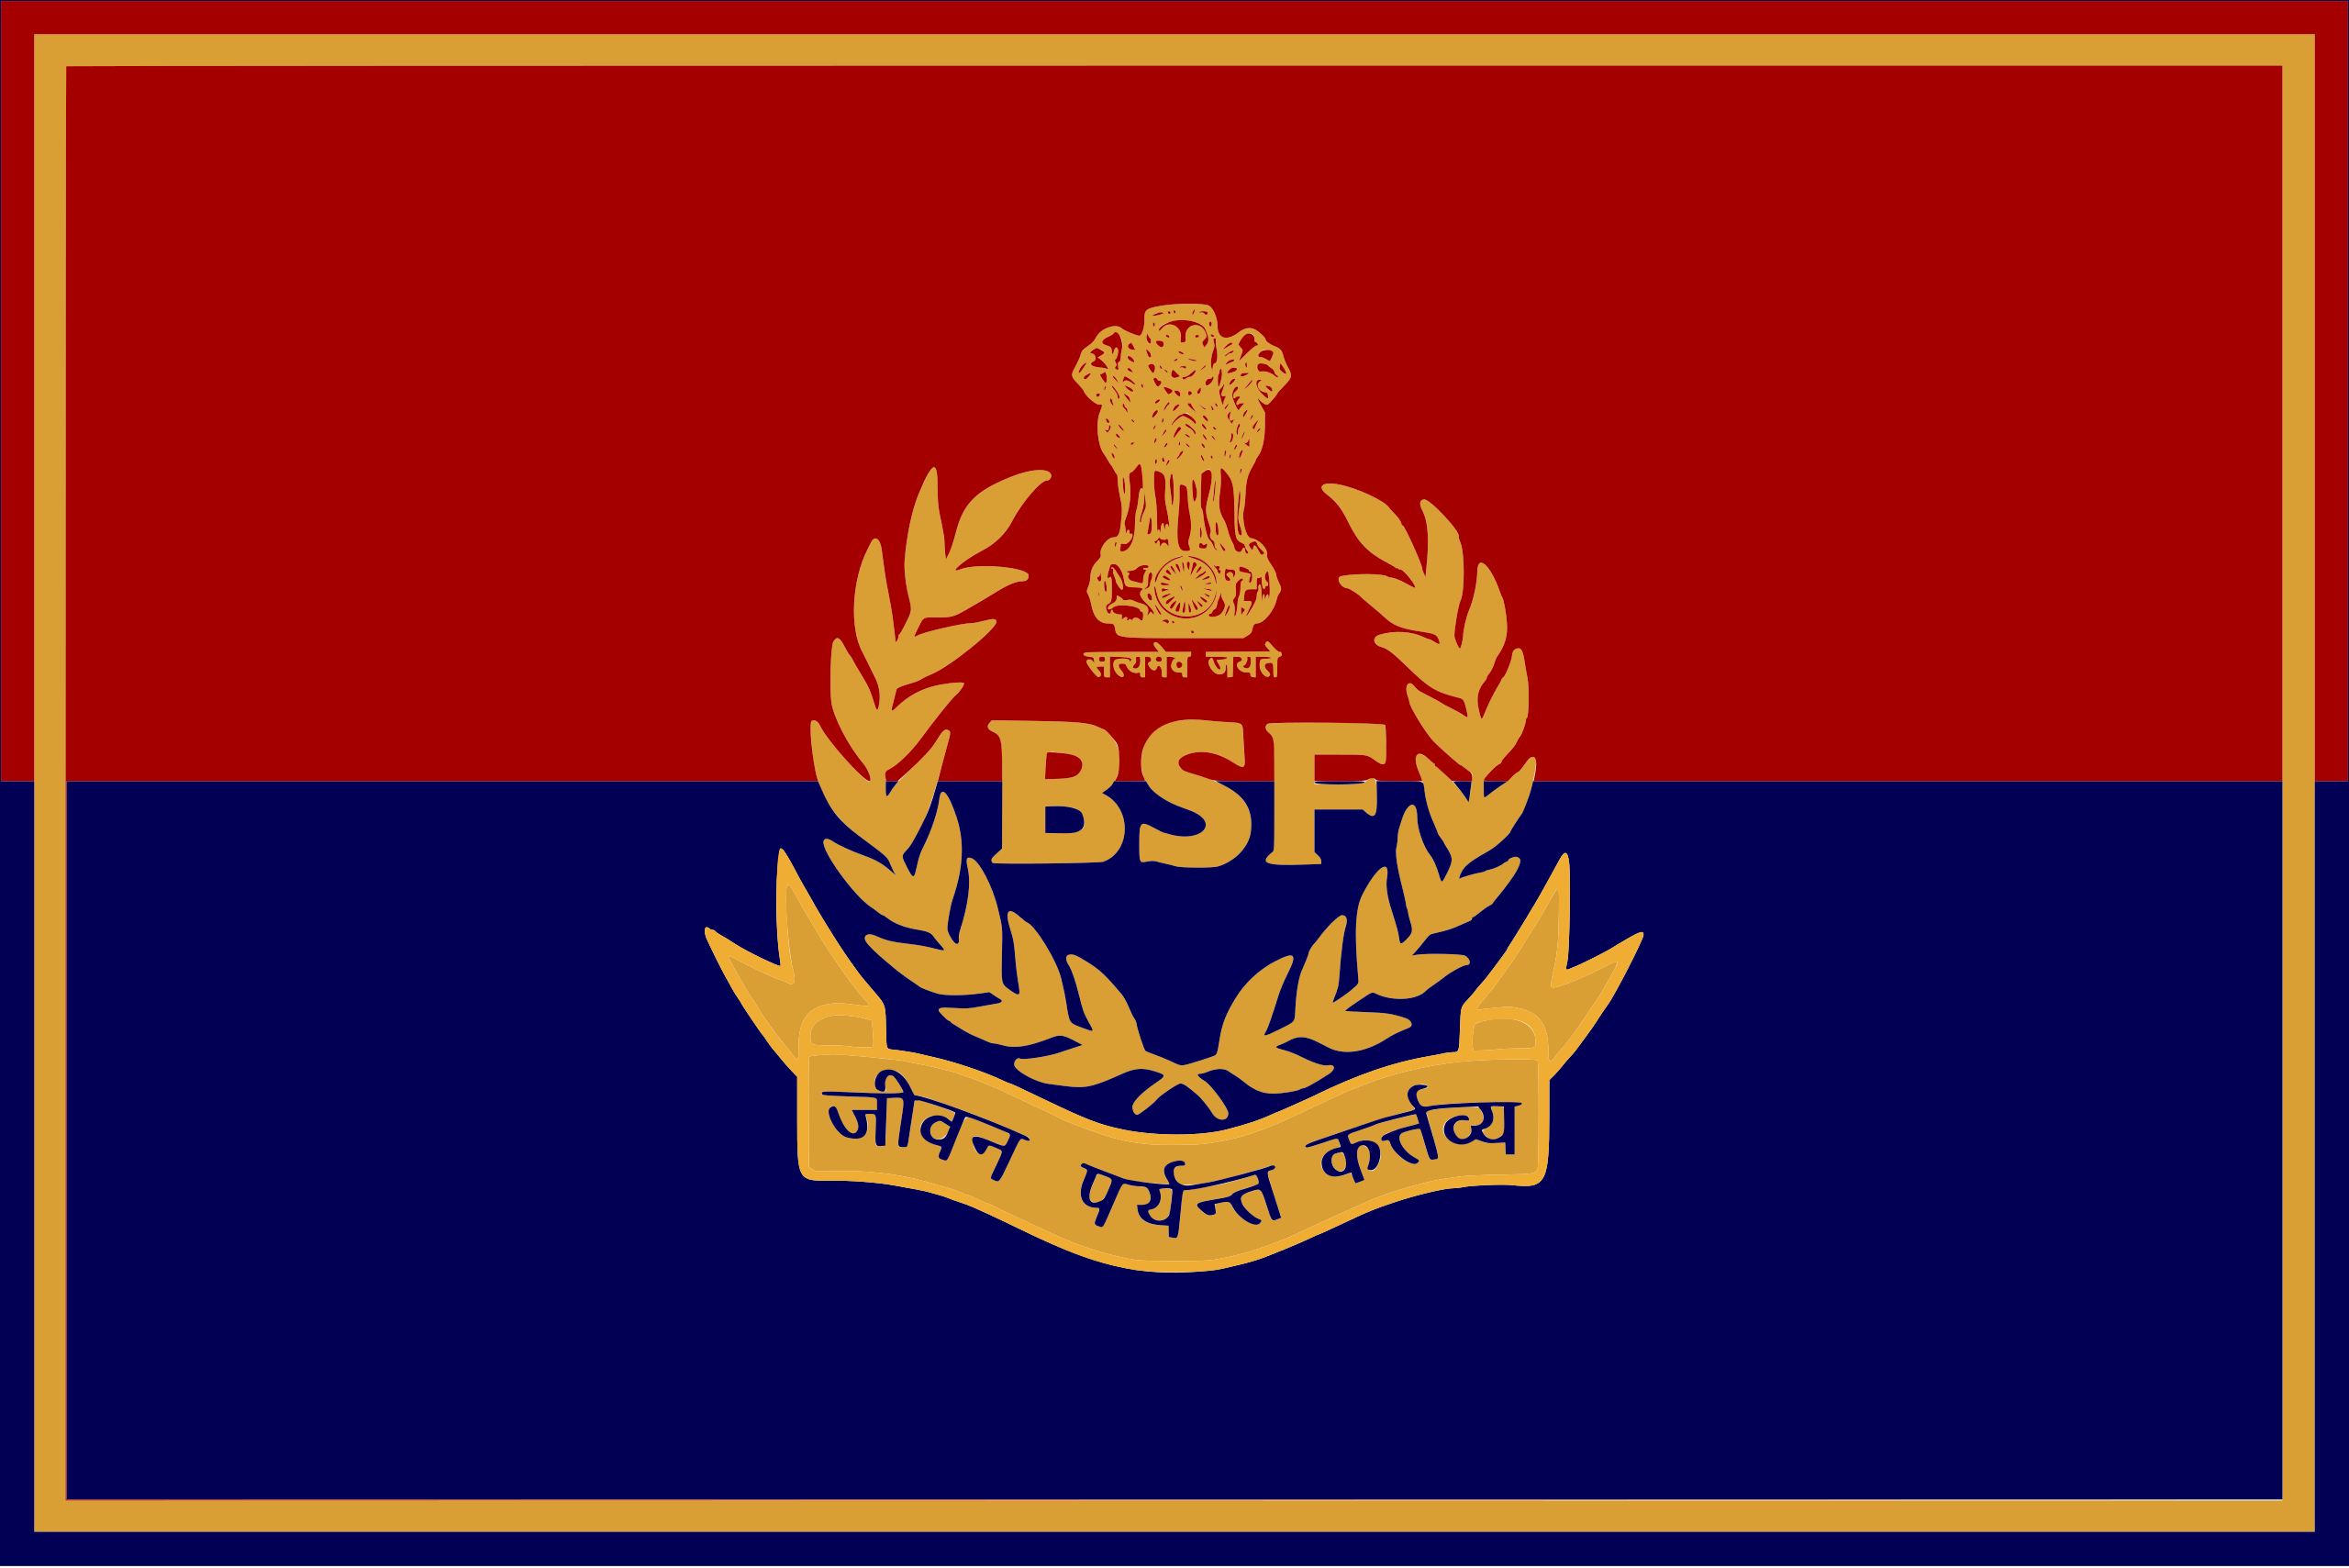 BSF Jobs: ಗಡಿ ಭದ್ರತಾ ಪಡೆಯಲ್ಲಿ 1526 ಹುದ್ದೆಗಳ ನೇಮಕಾತಿ; ಸಬ್‌ಇನ್ಸ್‌ಪೆಕ್ಟರ್‌, ಹೆಡ್‌ಕಾನ್ಸ್‌ಟೇಬಲ್‌ ಹುದ್ದೆಗೆ ಅರ್ಜಿ ಹಾಕಿ 1